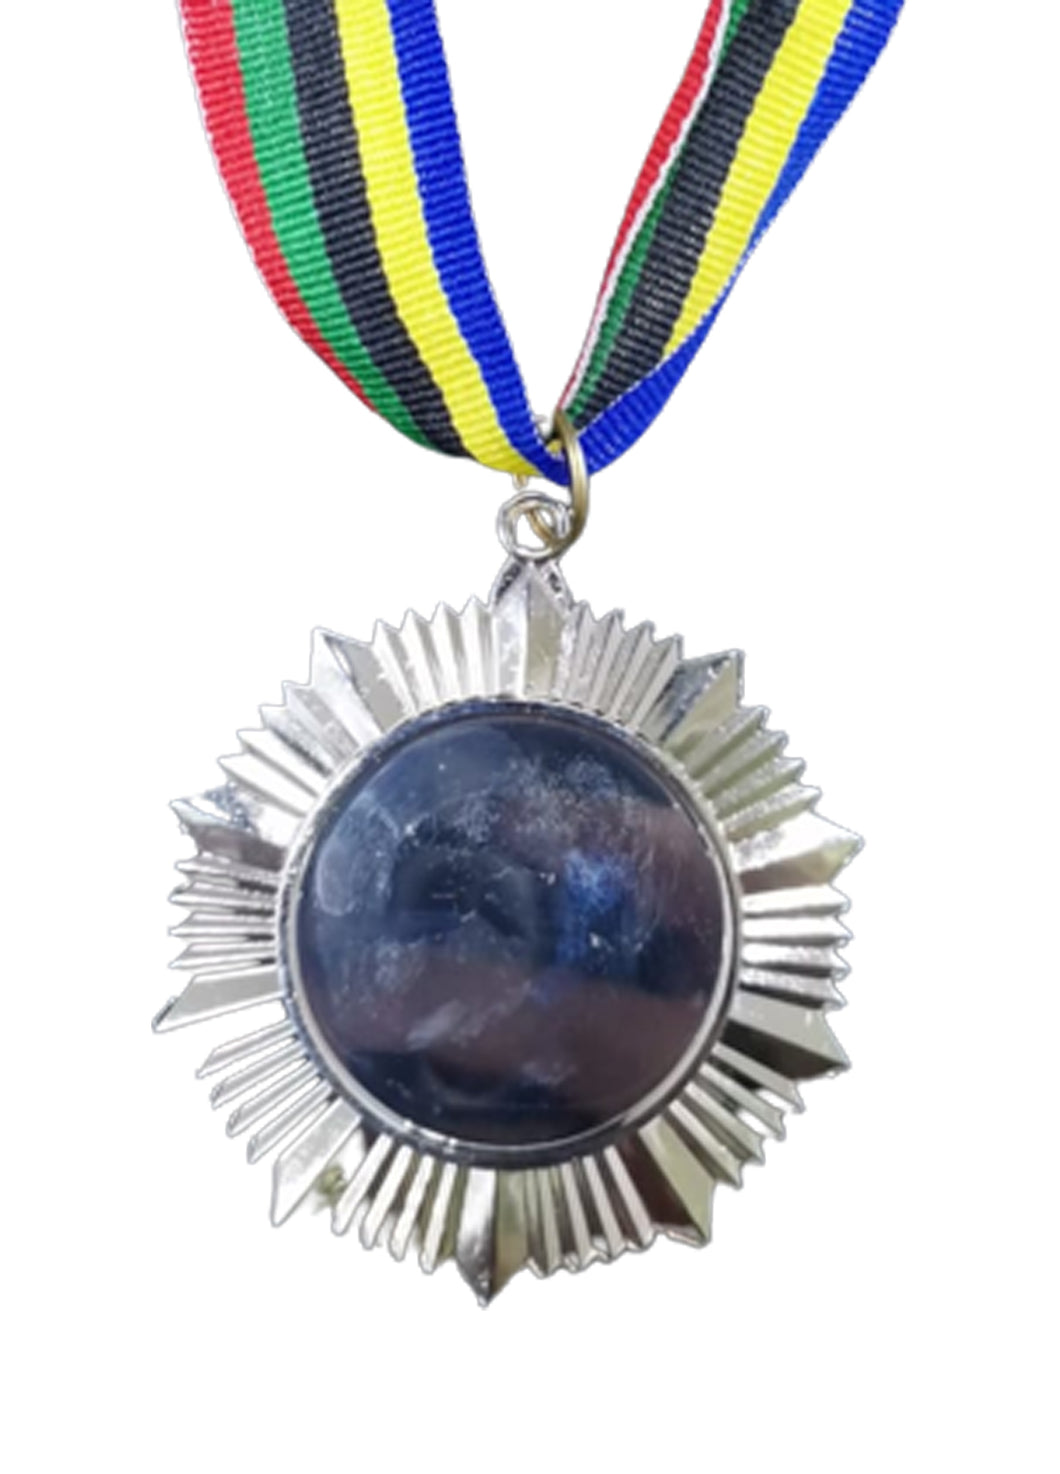 M55 SILVER Medal